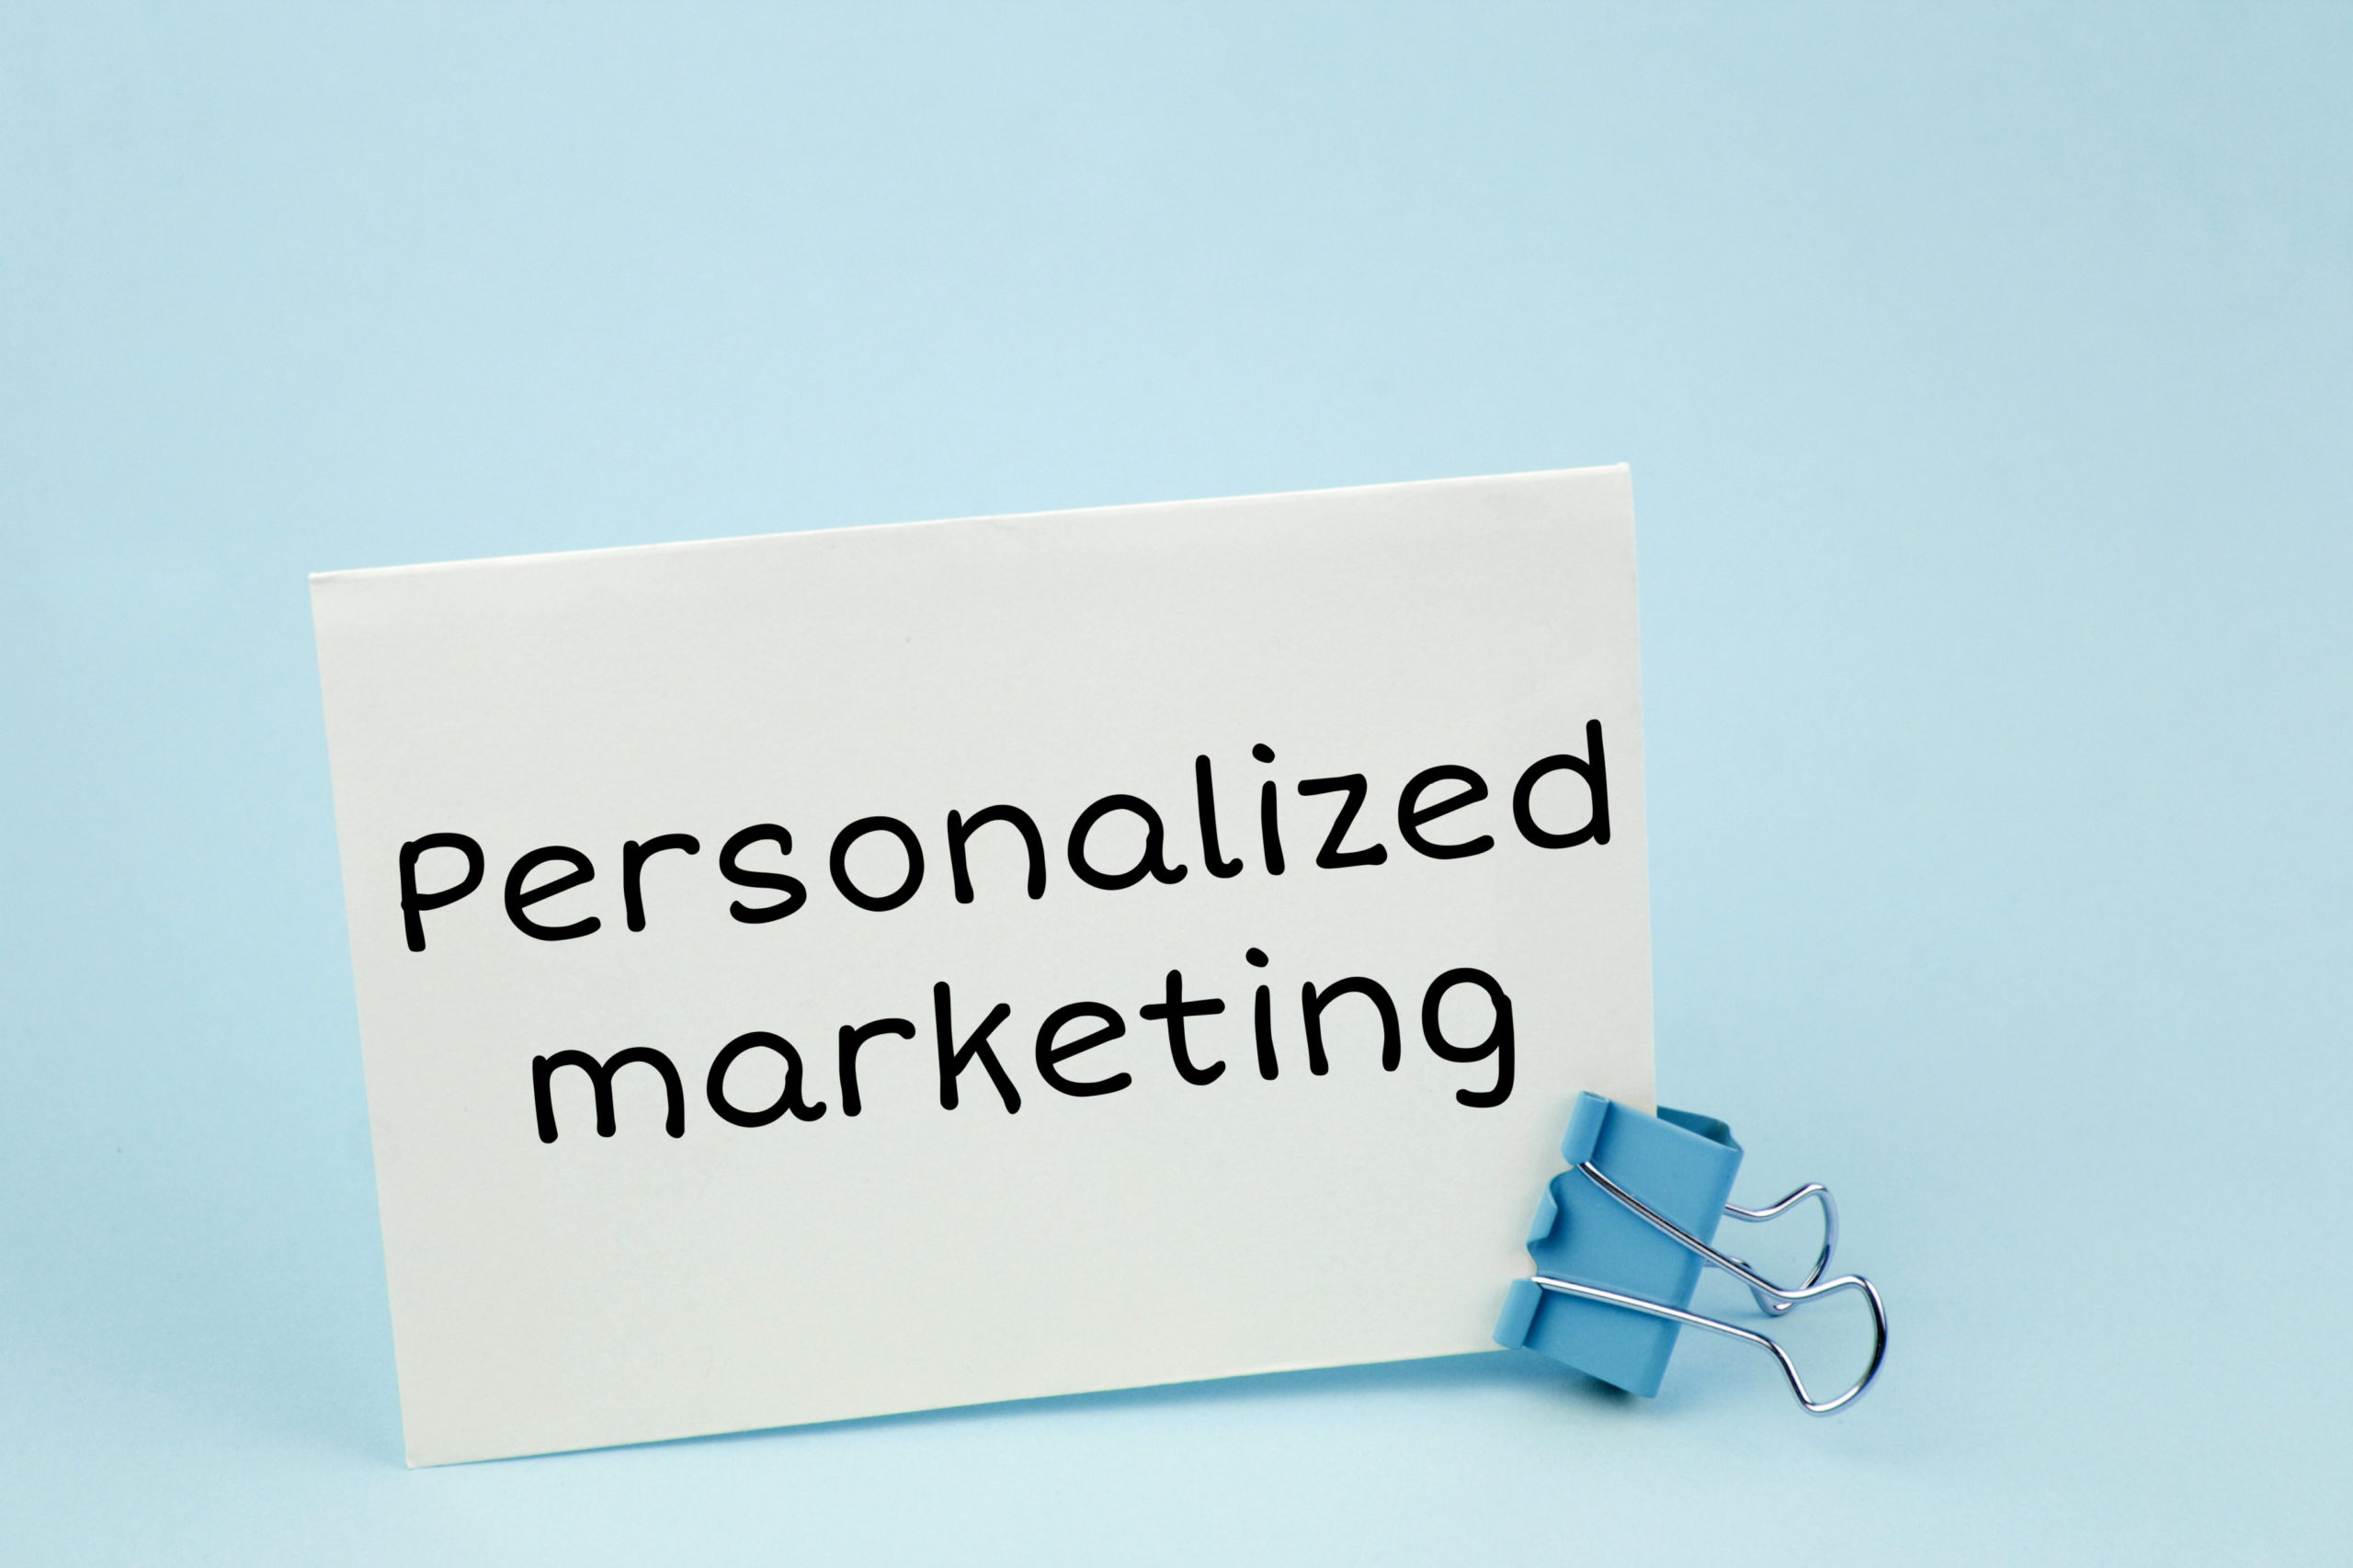 personalized-marketing-note-written-on-pad